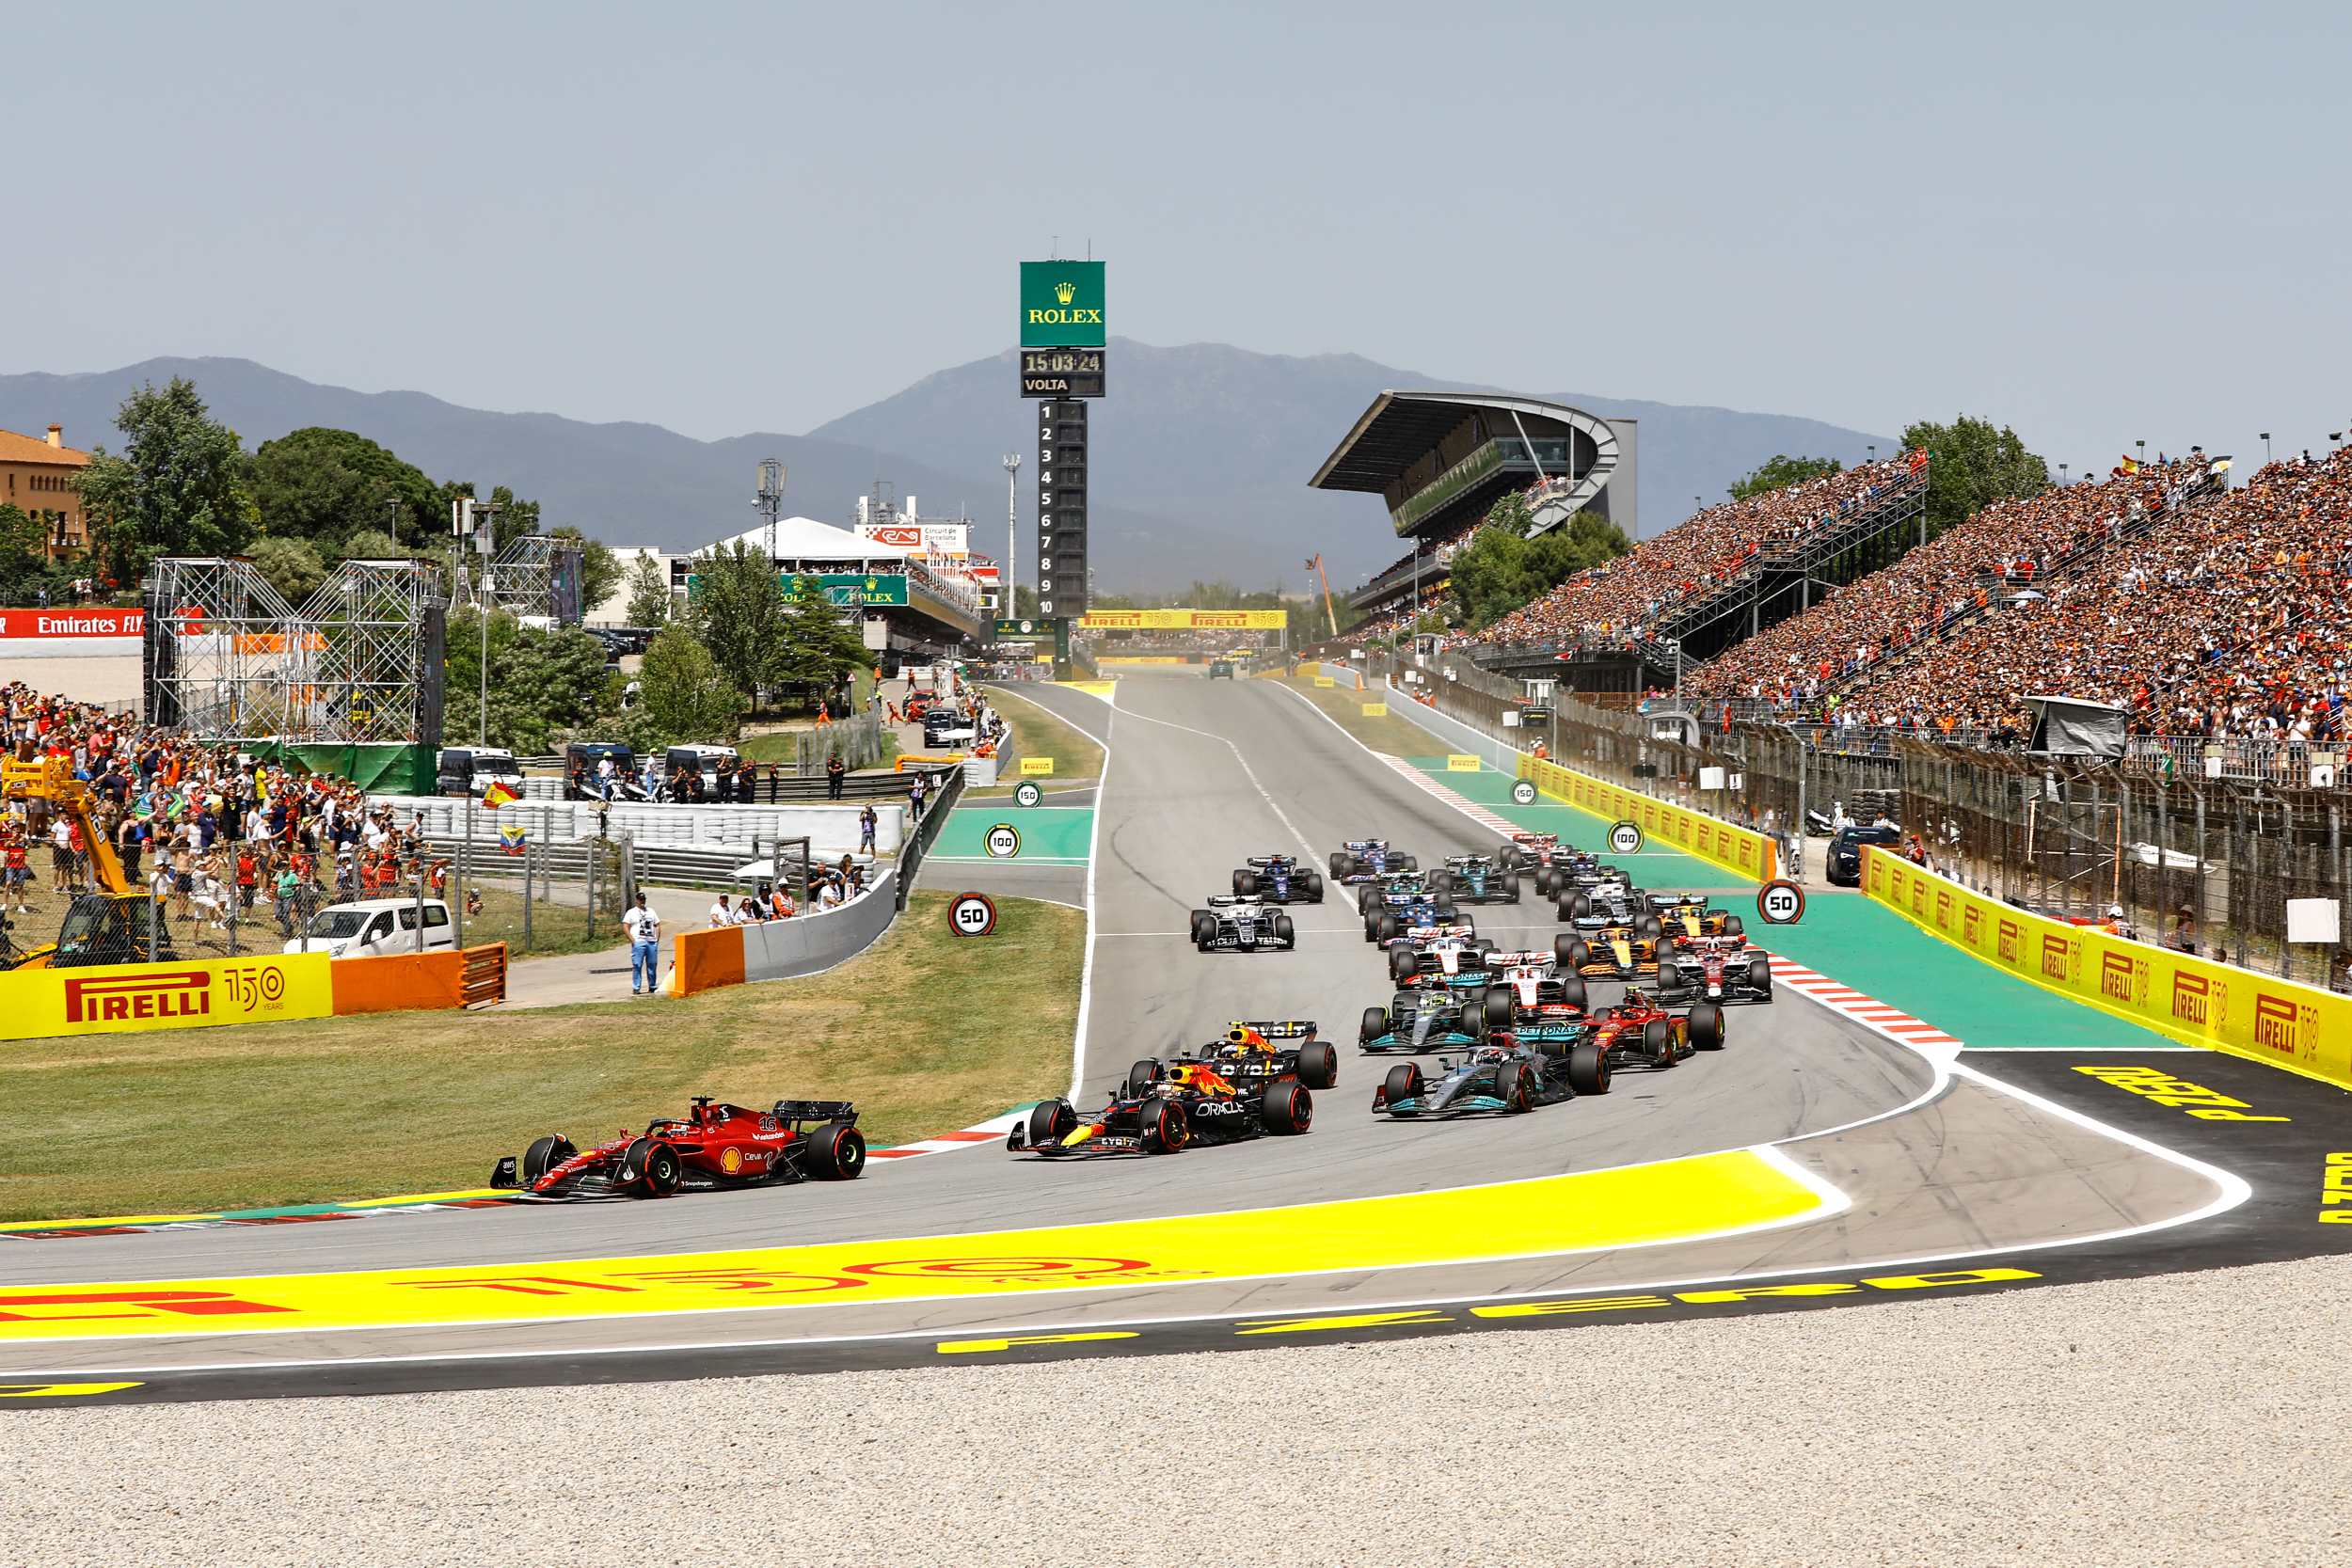 The Barcelona Formula 1 Race with SpainTop main image